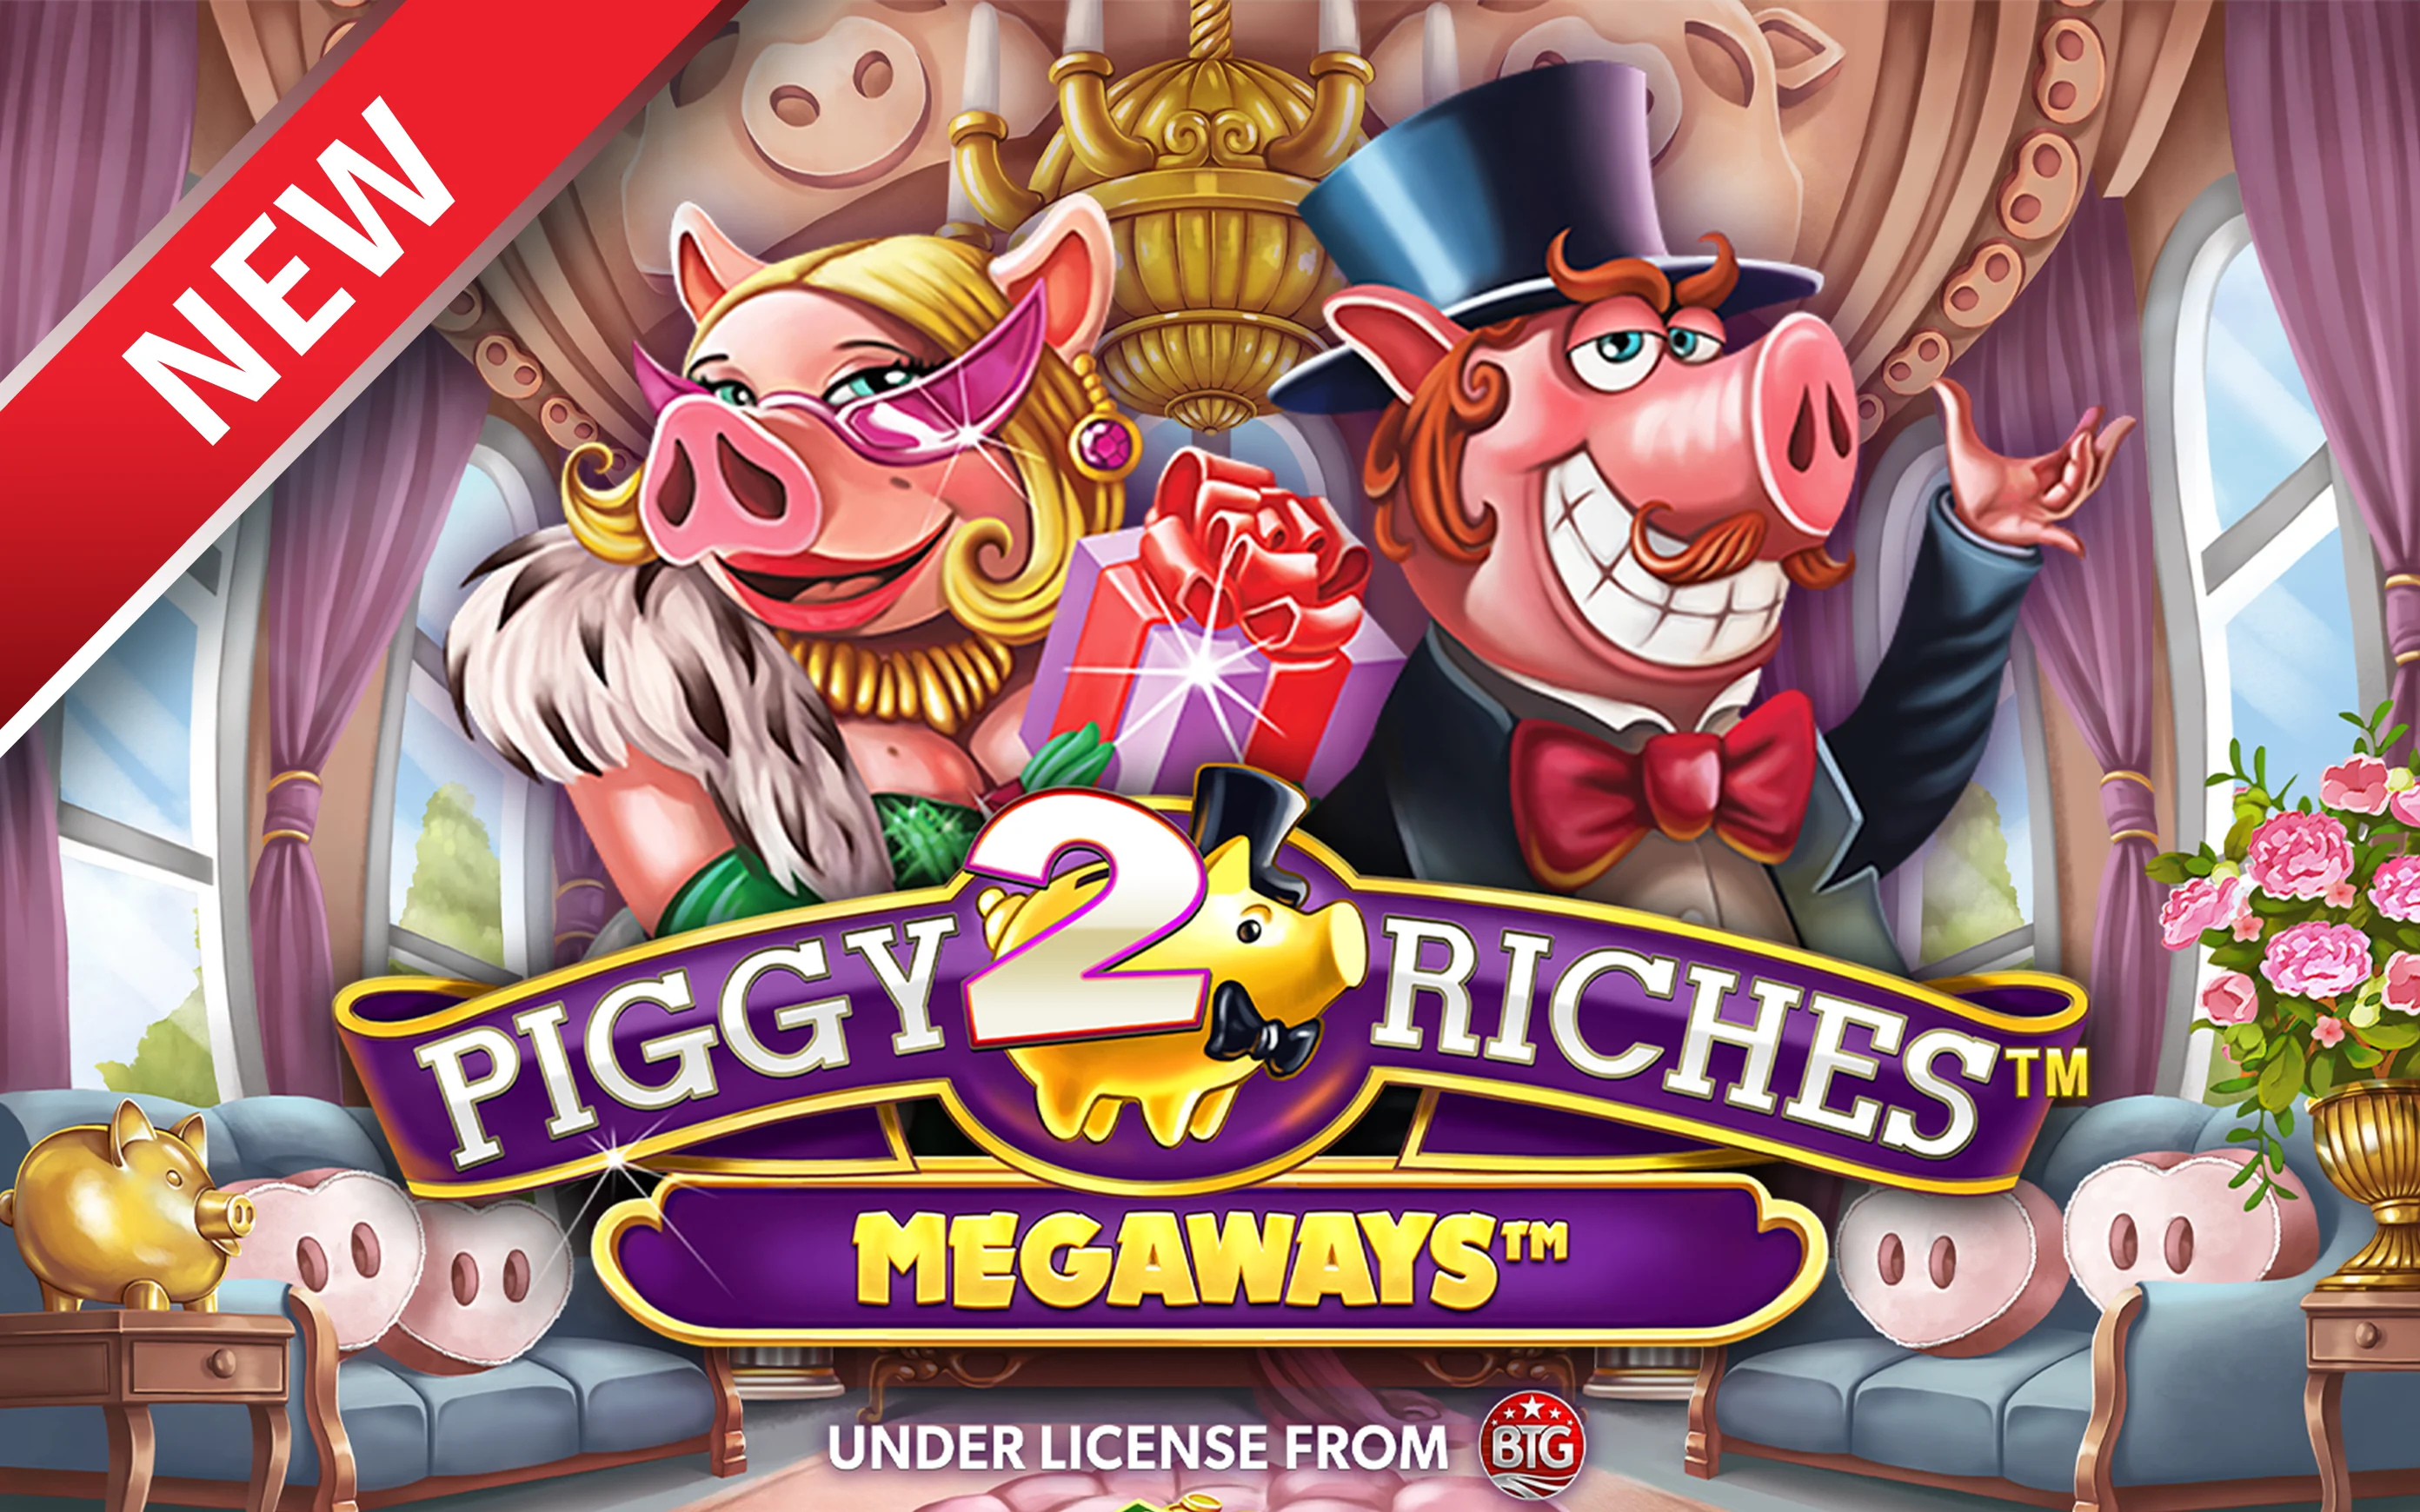 Speel Piggy Riches 2 Megaways™ op Starcasino.be online casino